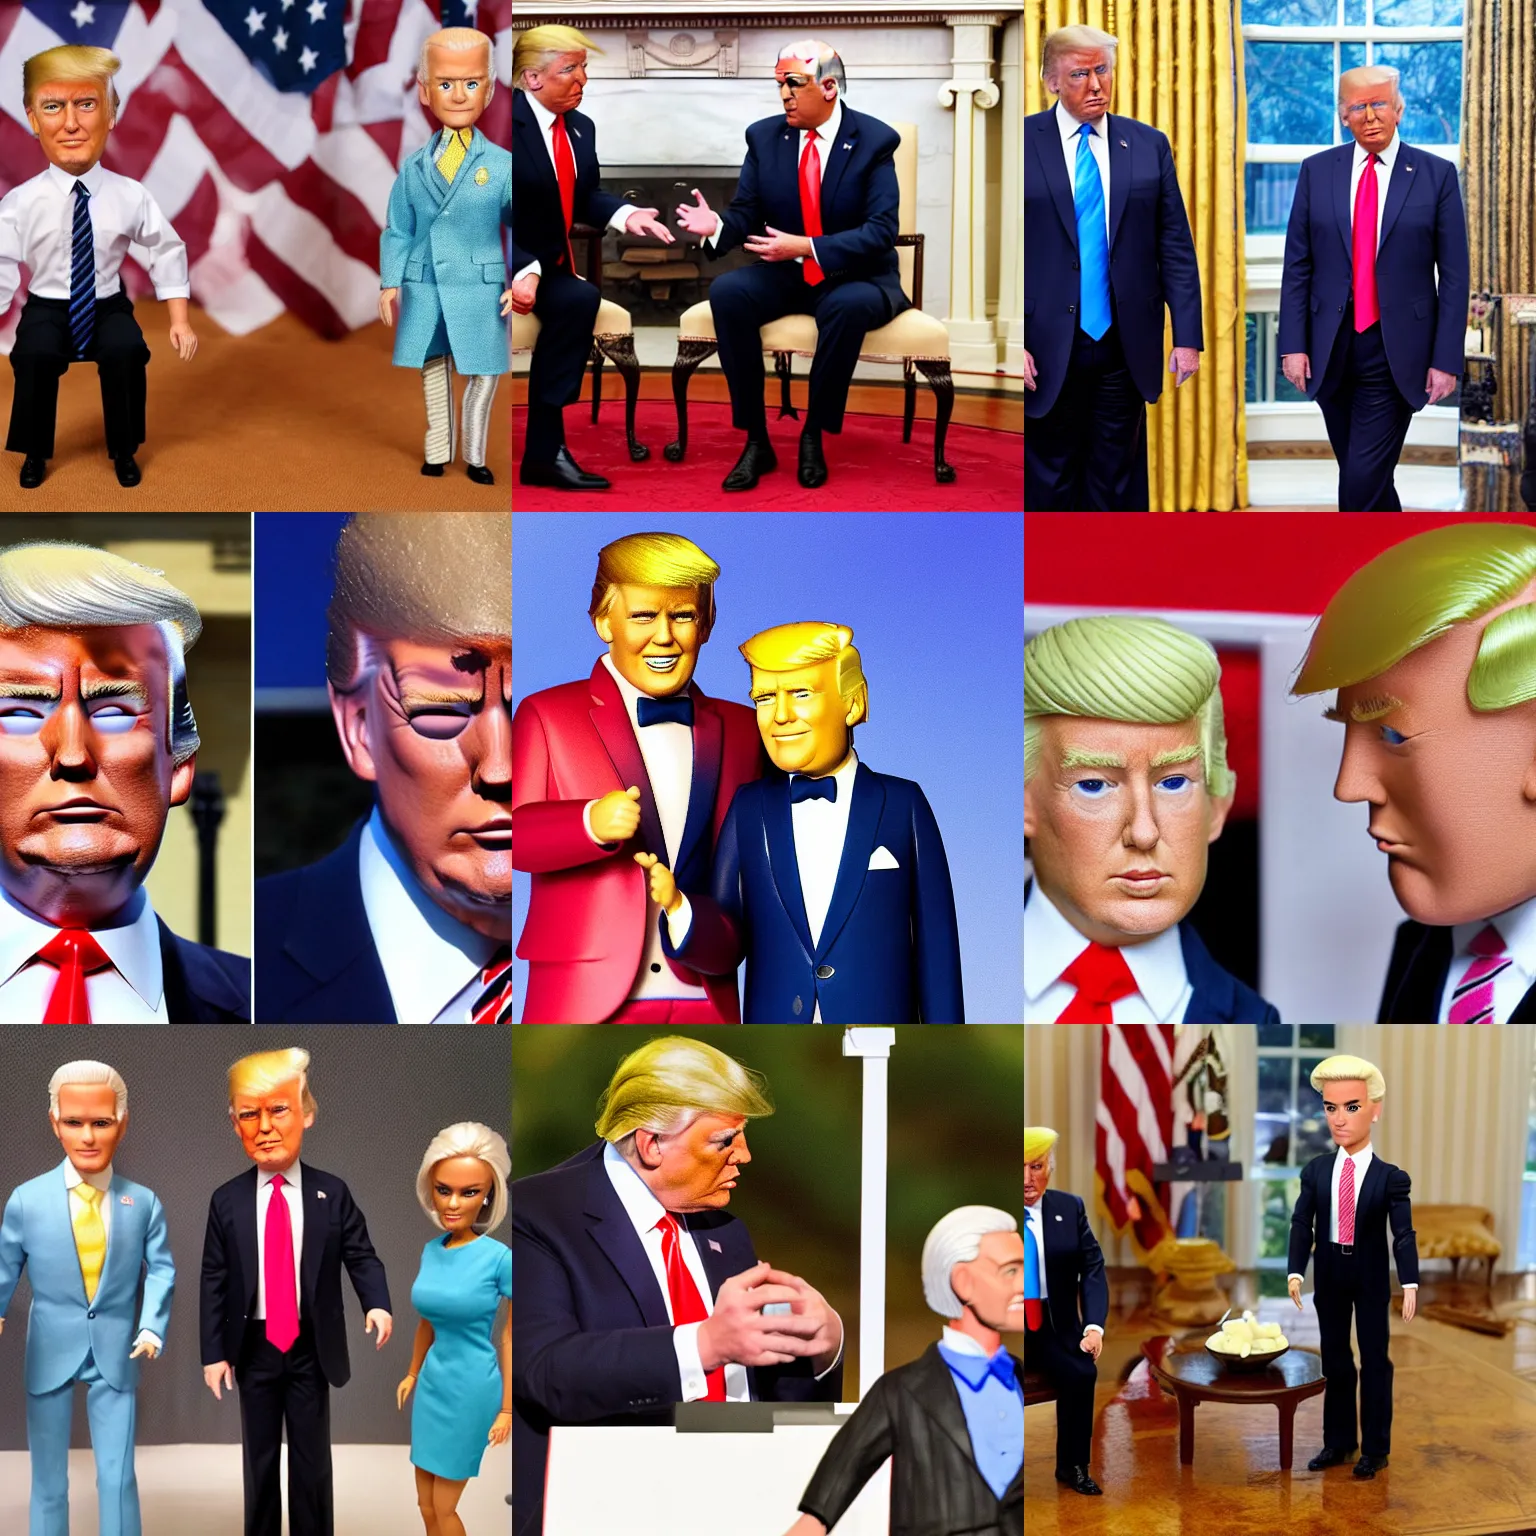 Prompt: trump and biden as ken and barbie dolls